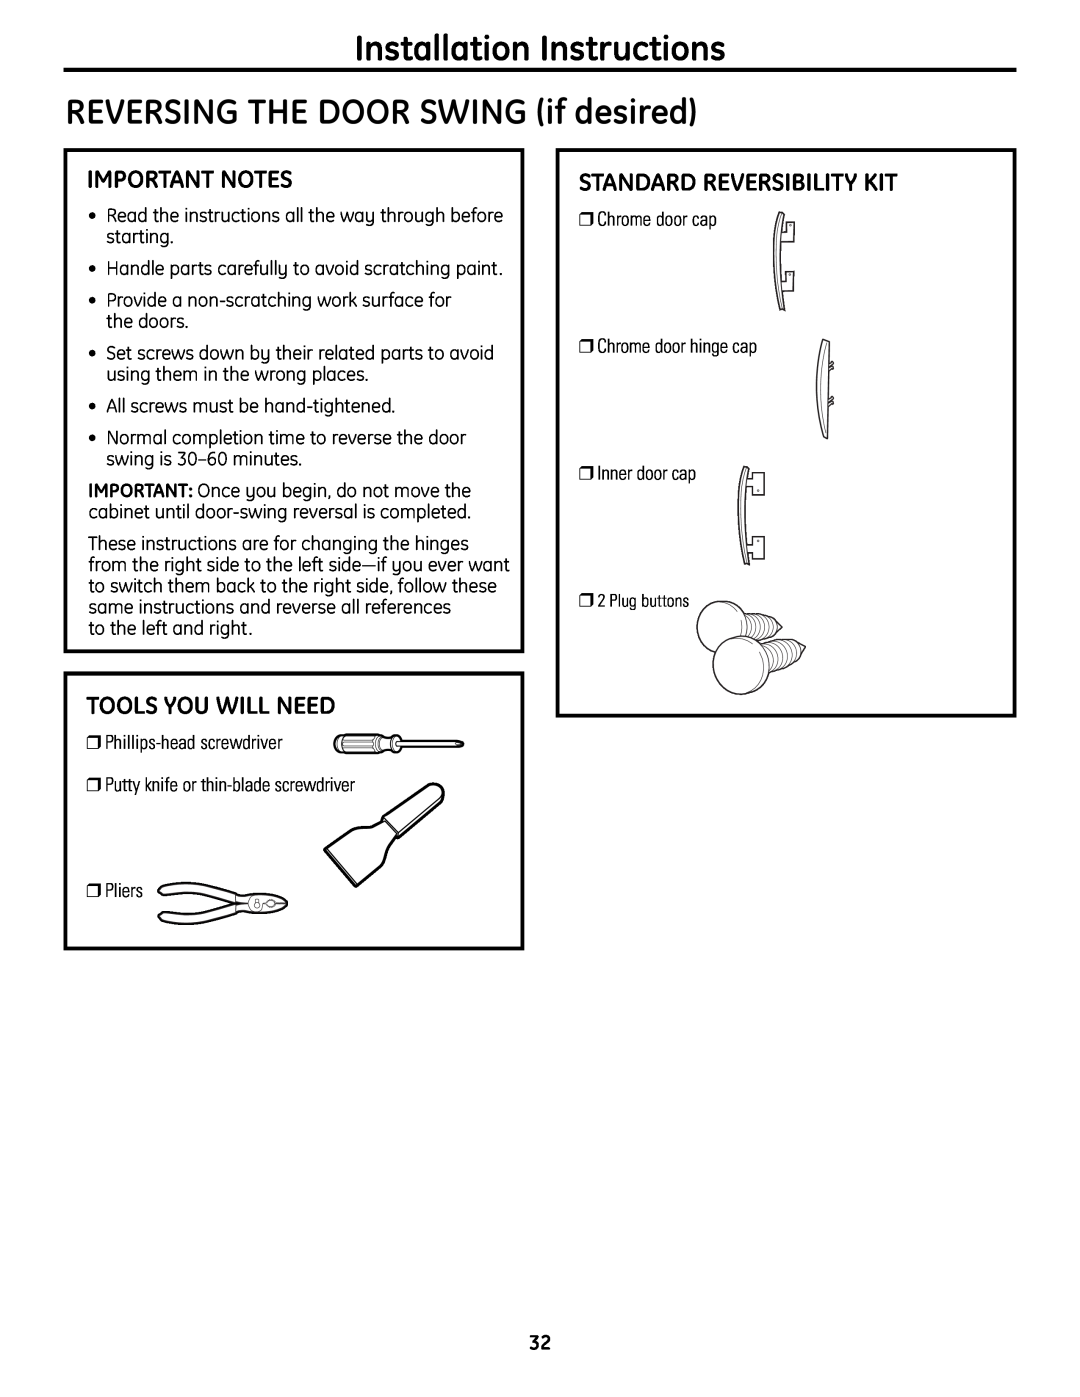 GE UPVH890 Installation Instructions REVERSING THE DOOR SWING if desired, Important Notes, Standard Reversibility Kit 